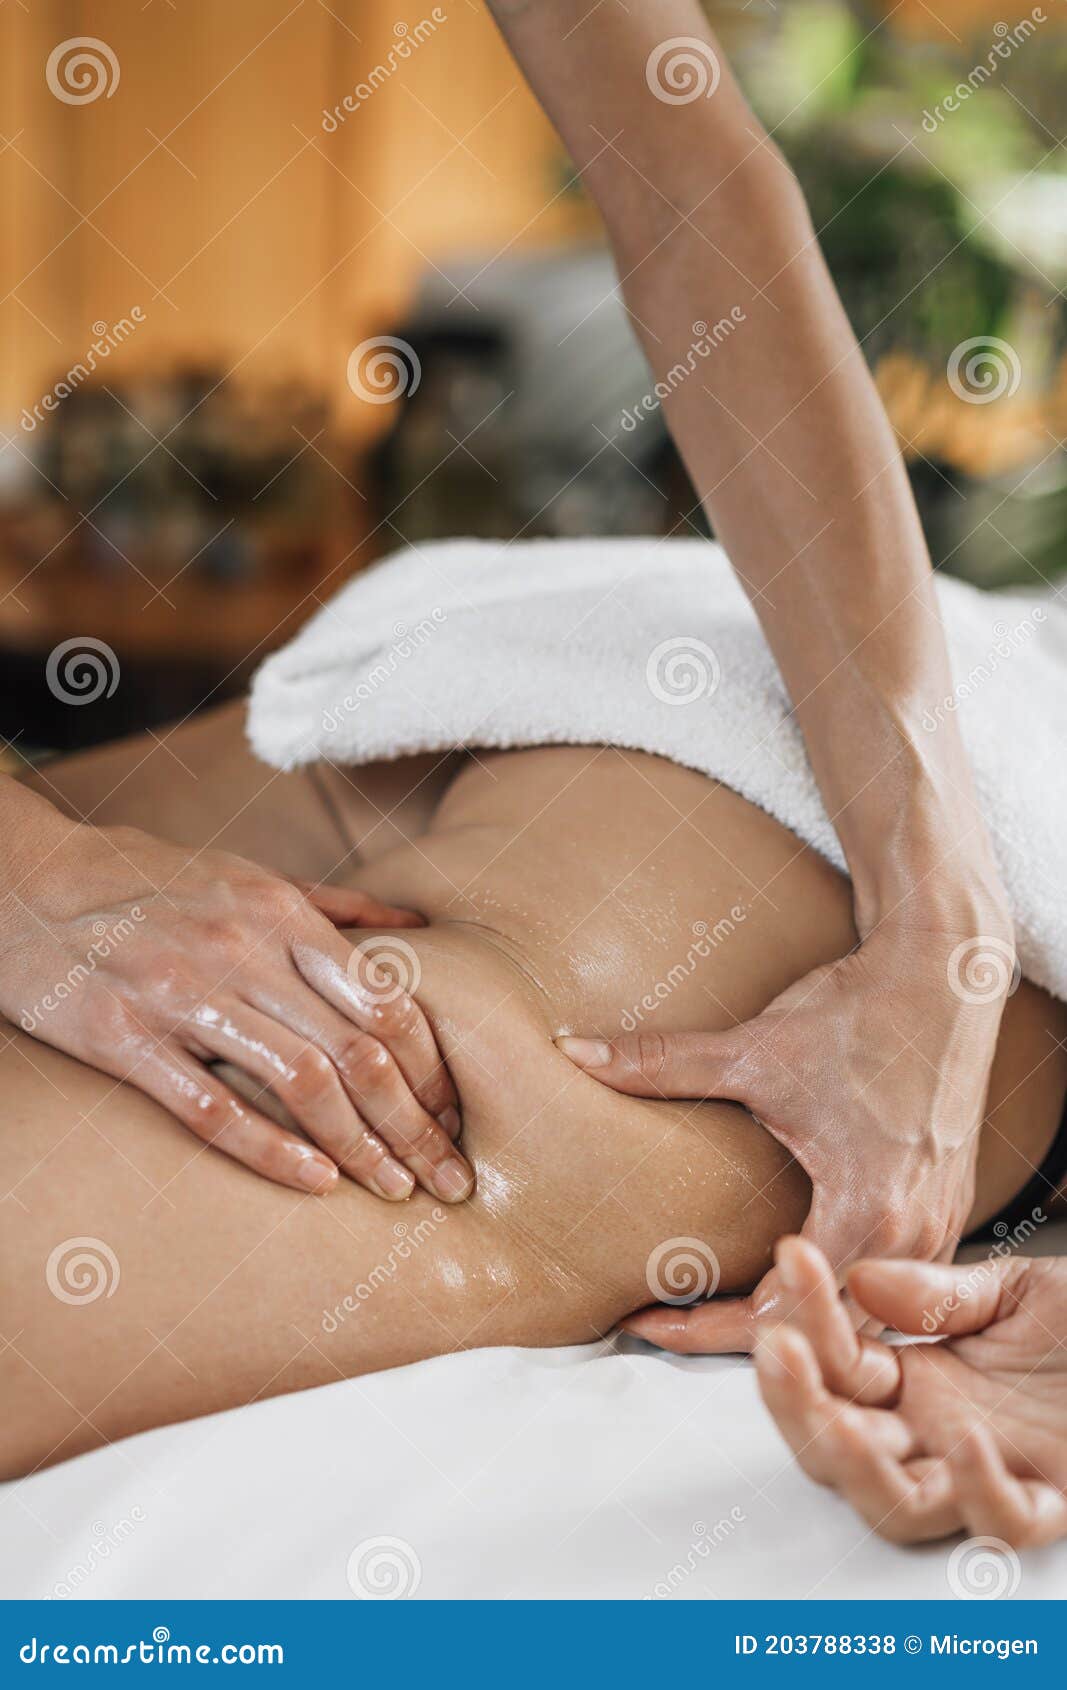 Hot oil massage gifs